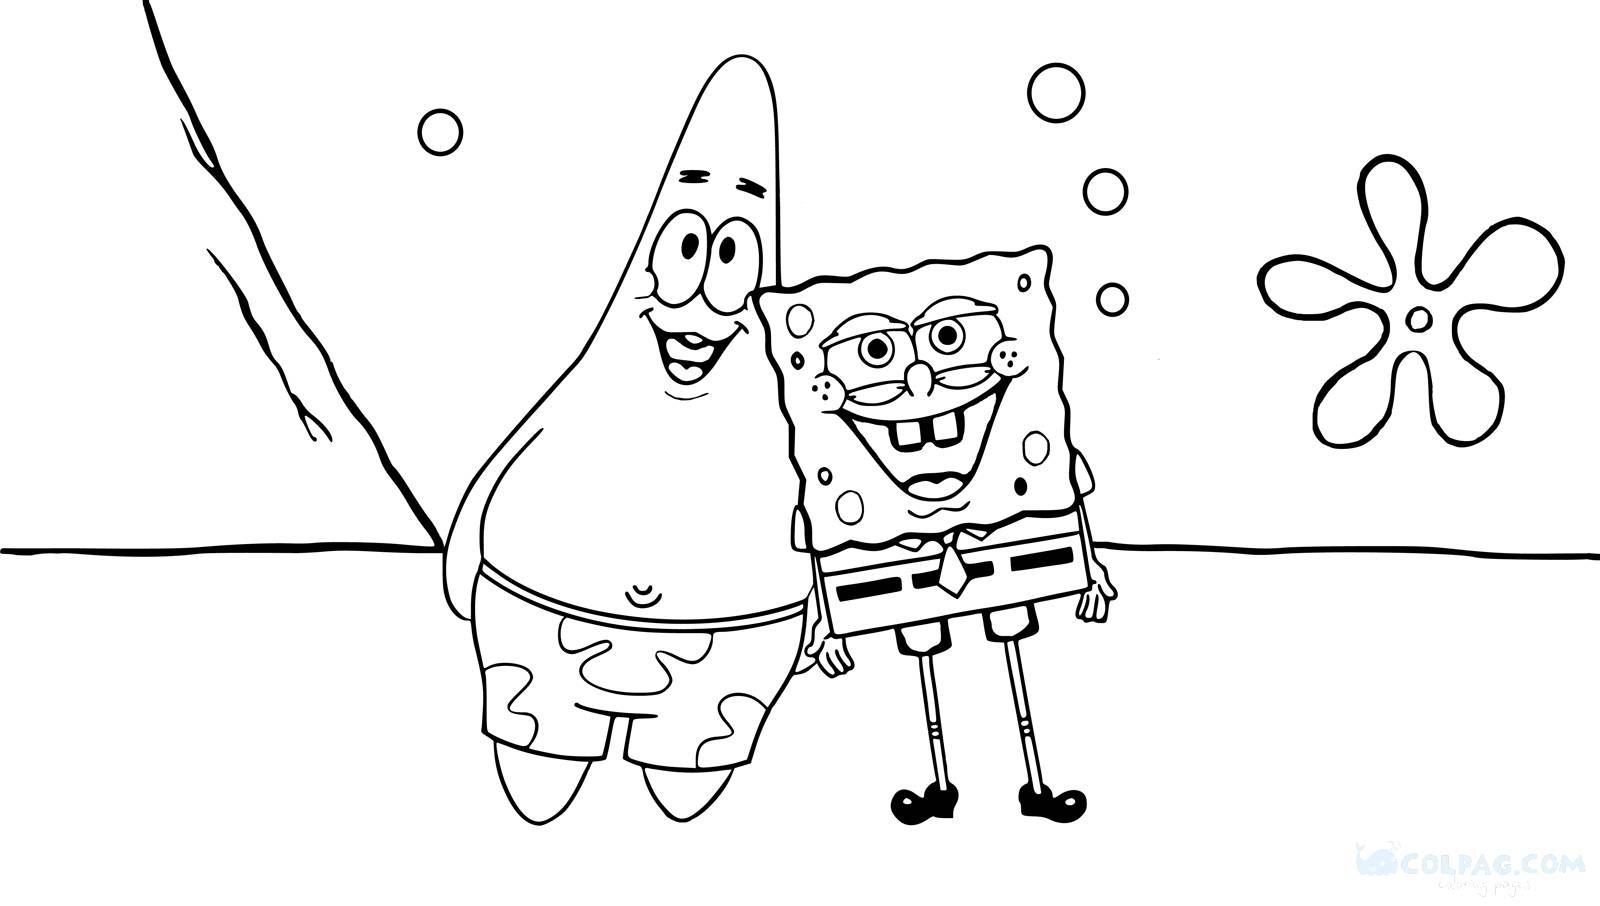 sponge-bob-coloring-page-colpag-com-11